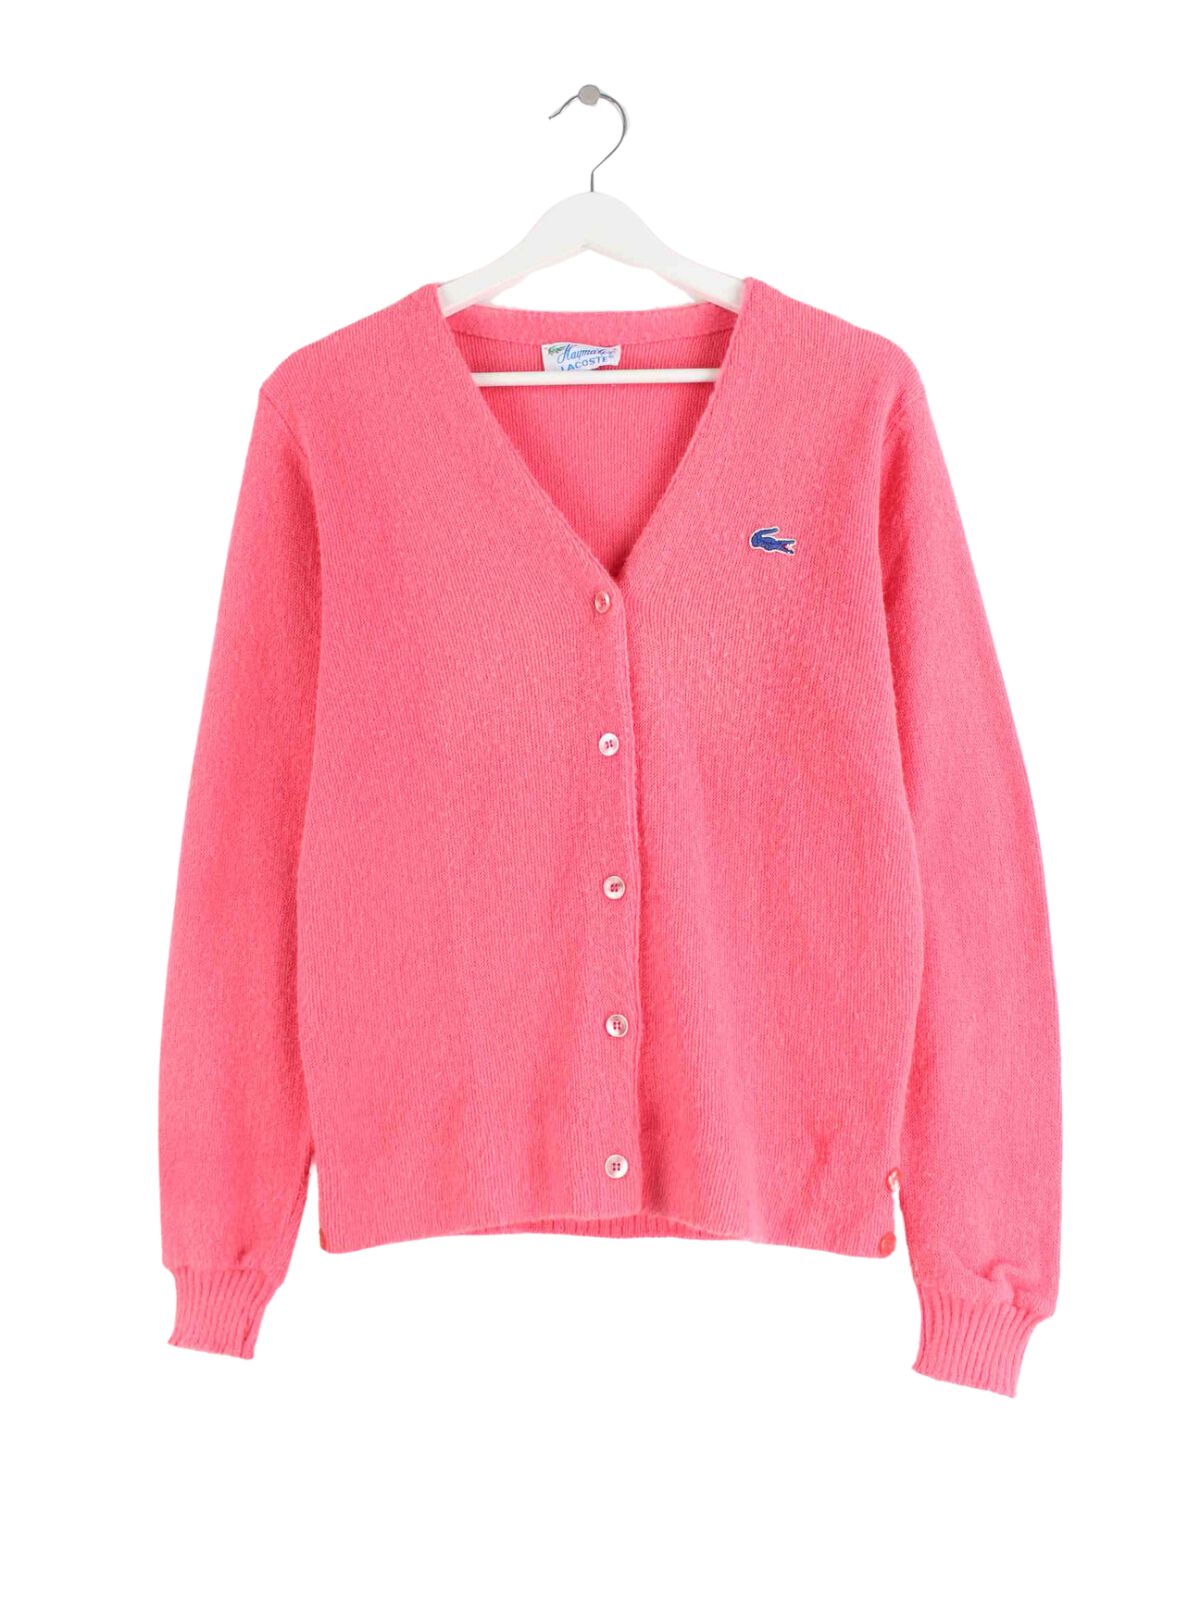 Lacoste Damen 90s Vintage Pullover Pink M (front image)